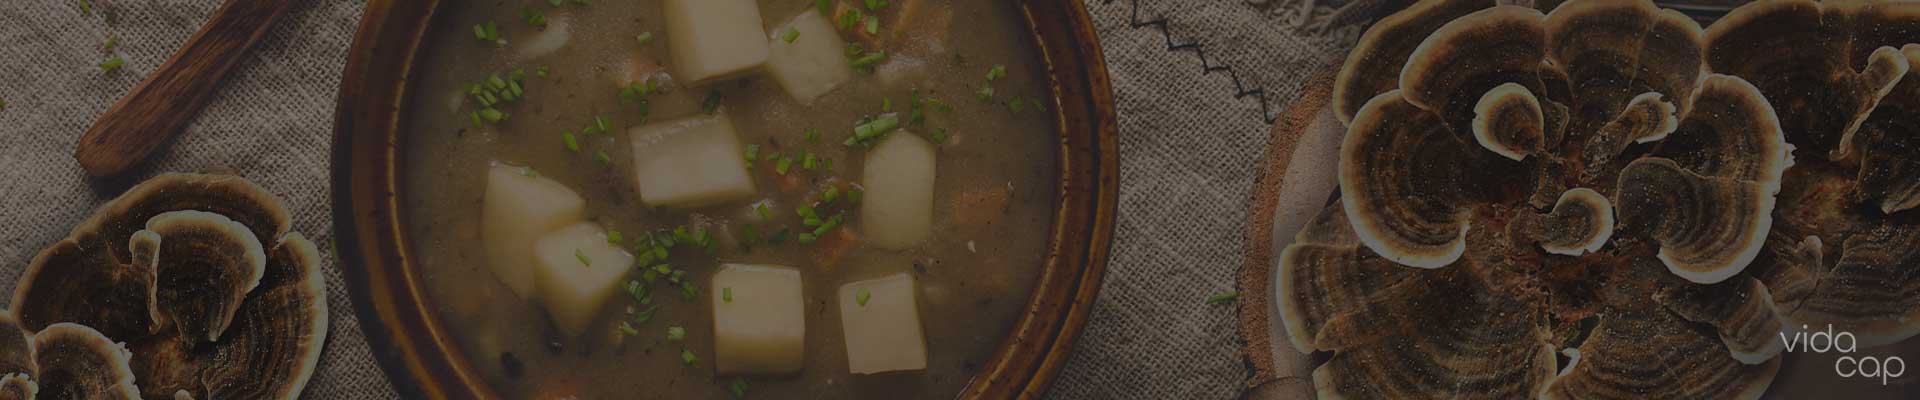 banner-turkey-tail-mushroom-soup-recipe